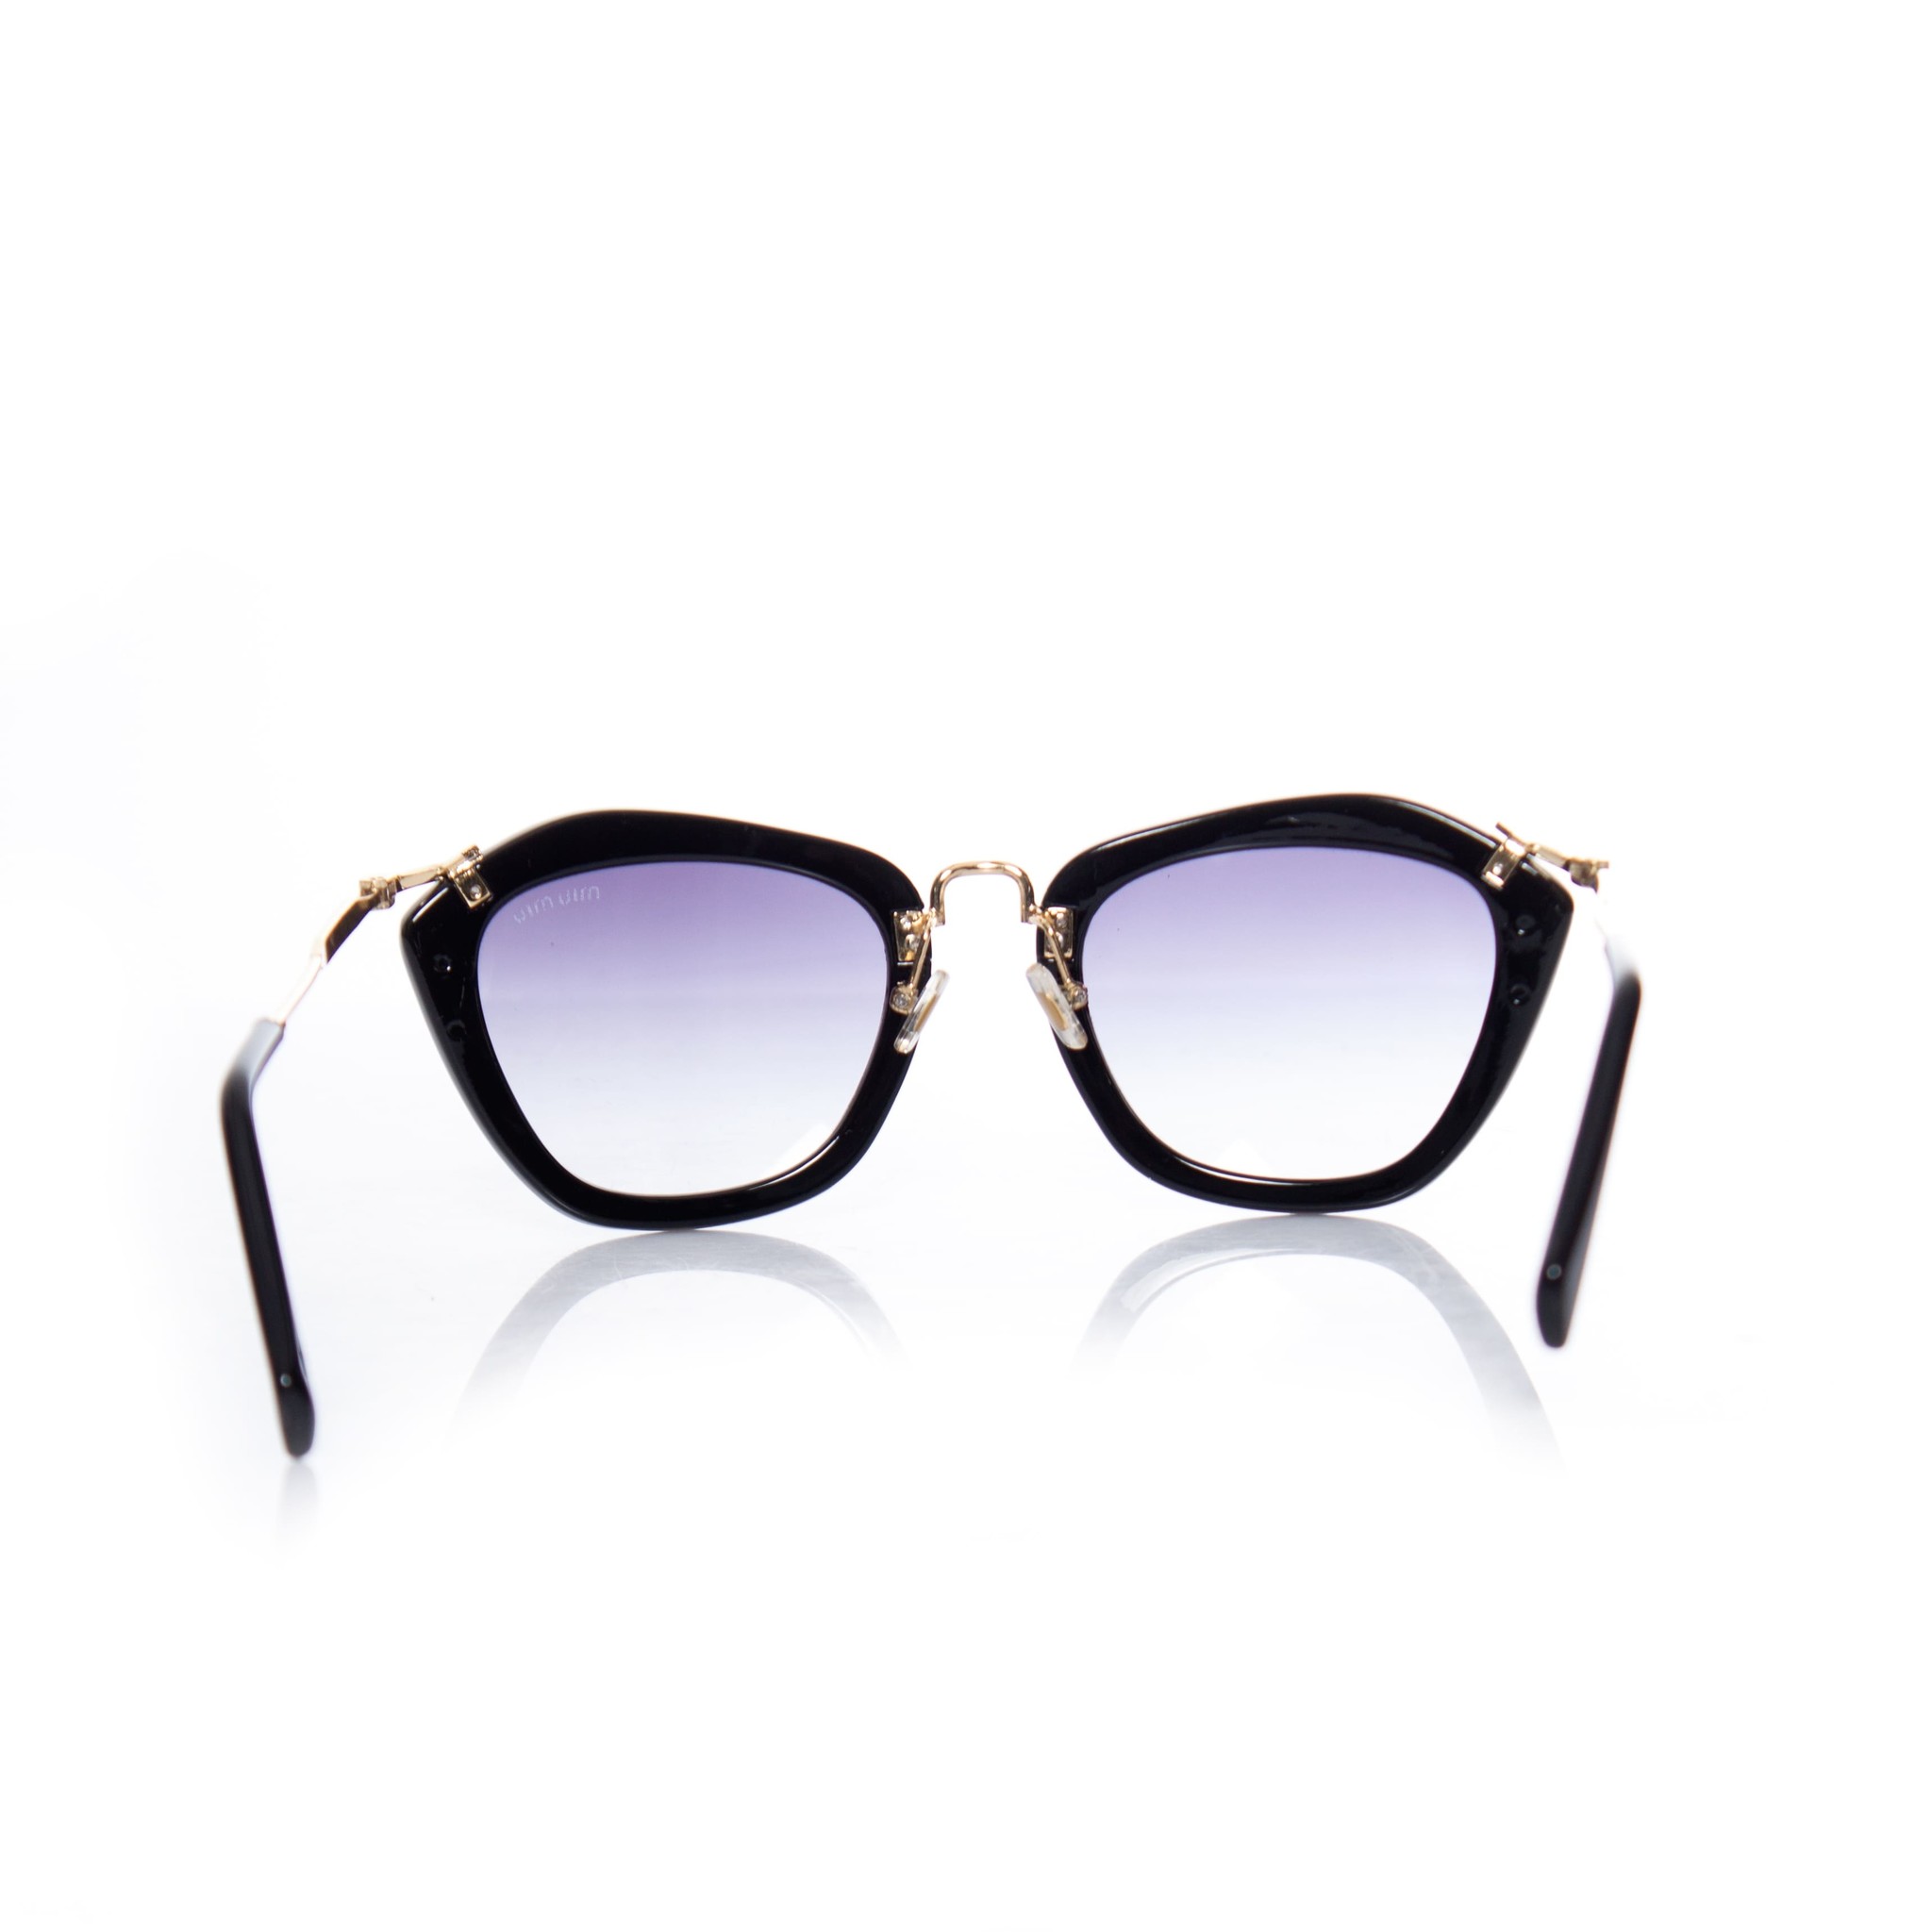 Miu Miu, Noir sunglasses. - Unique Designer Pieces